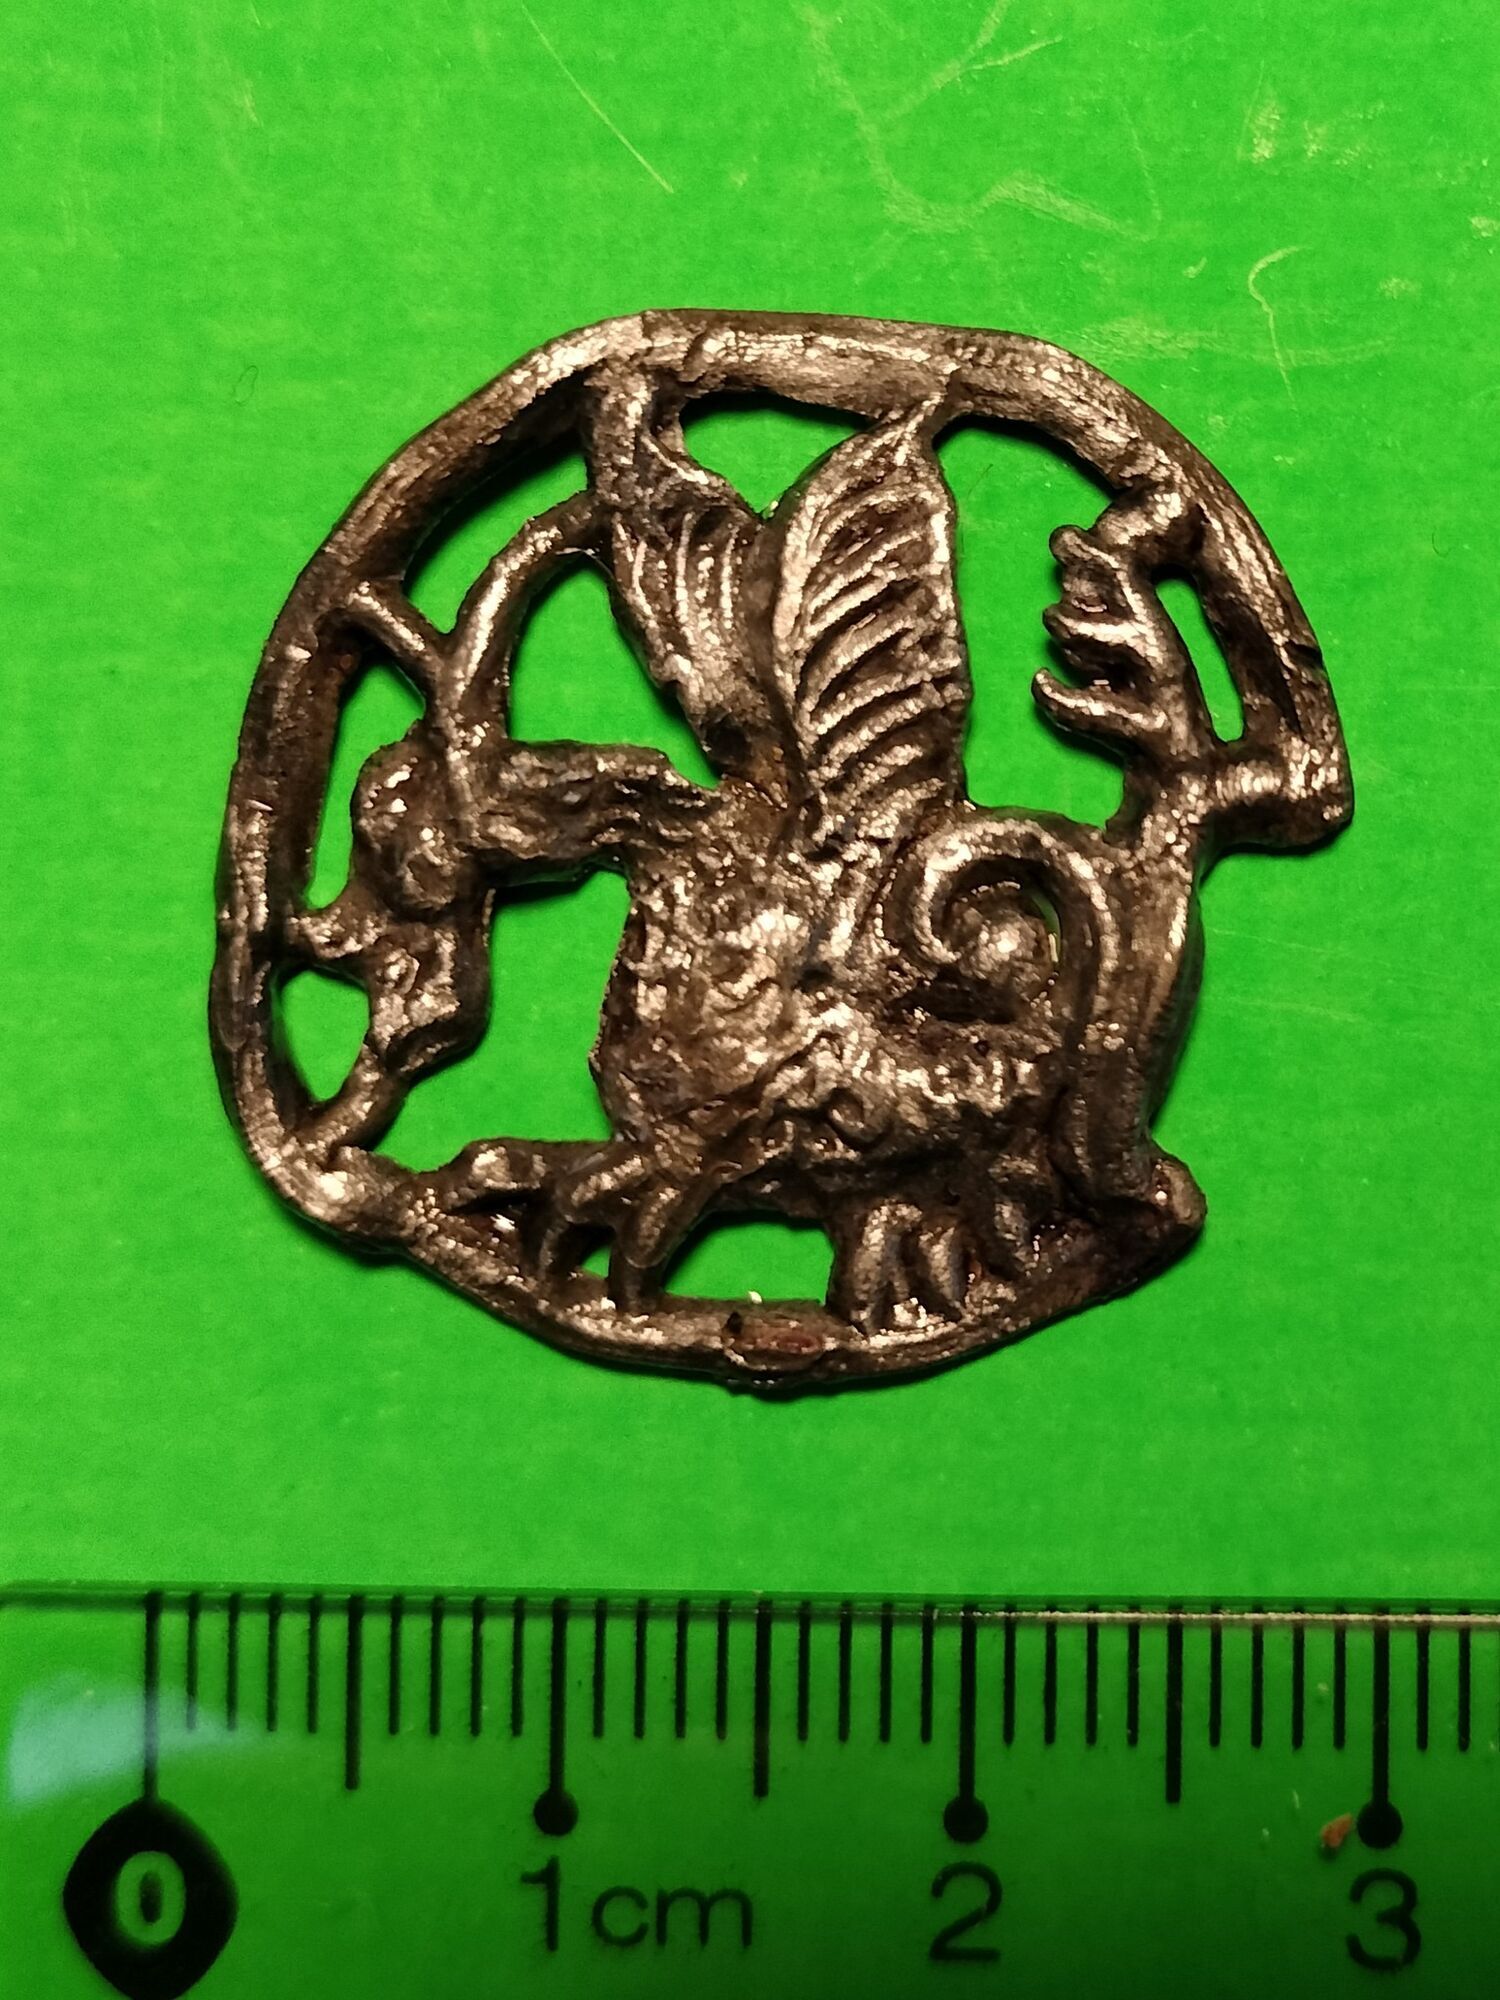 Medieval "pilgrim's badge" with basilisk image found in Poland: photo